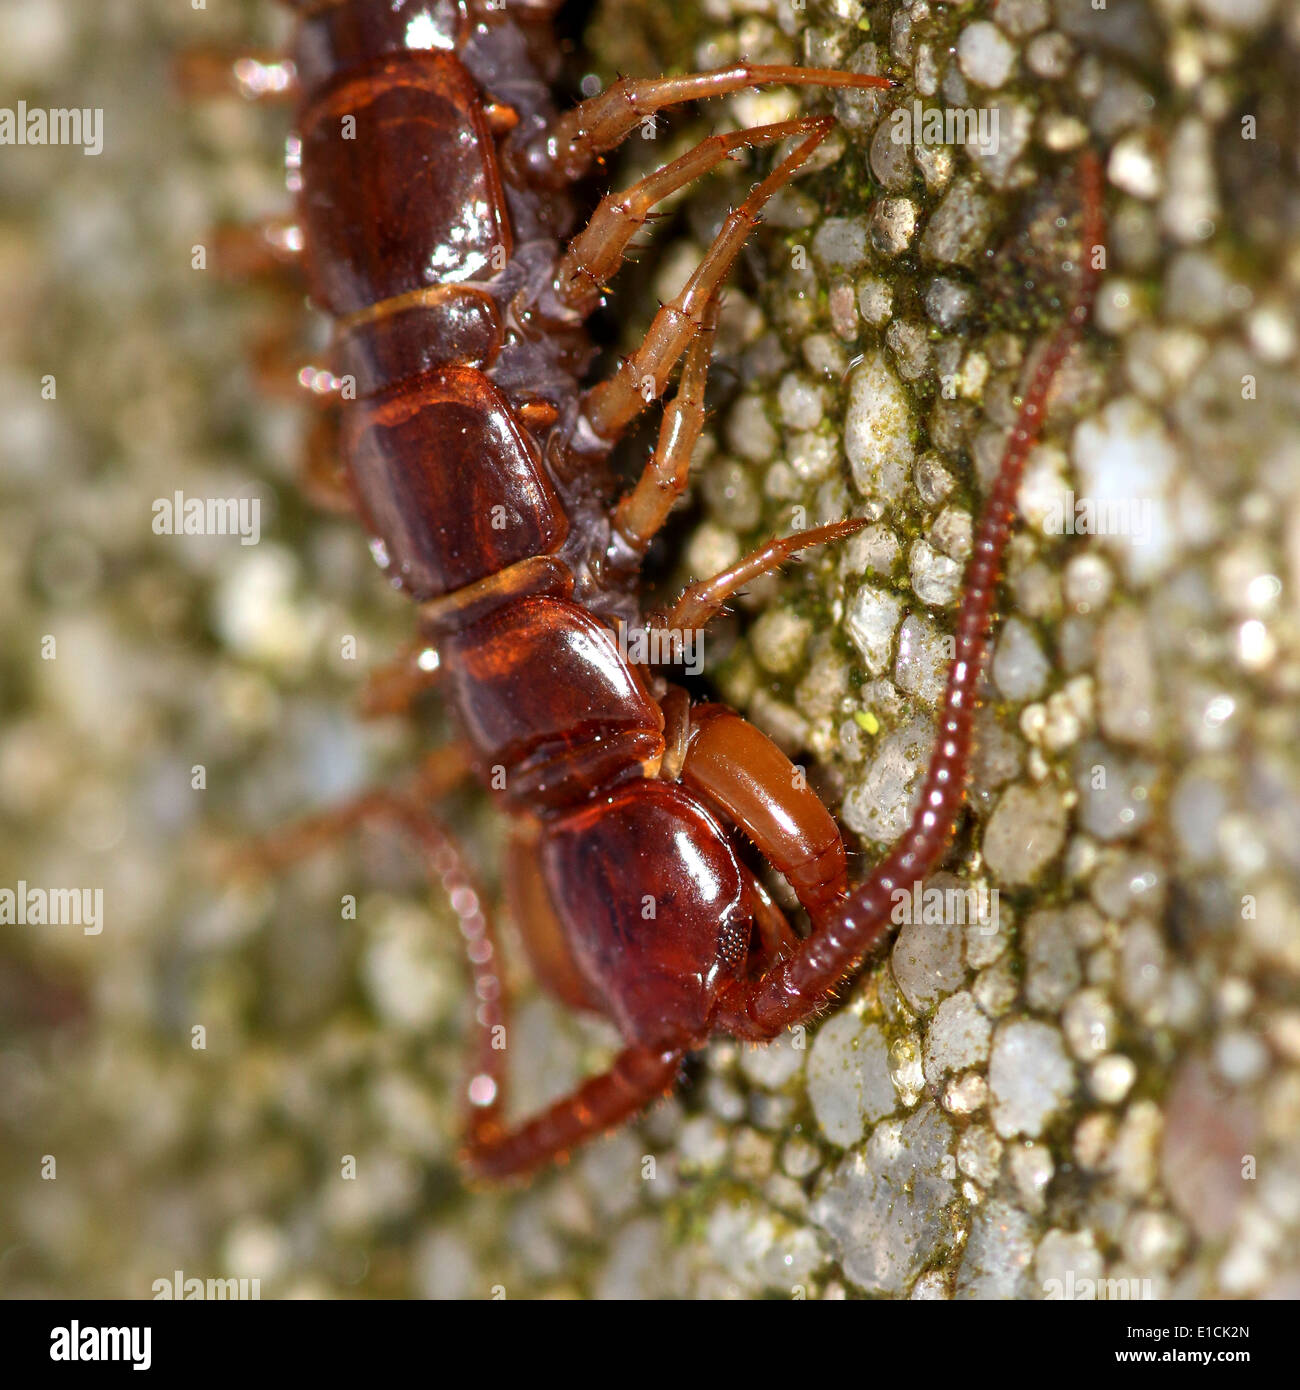 European brown centipede or  stone centipede (Lithobius forficatus) macro close-up Stock Photo